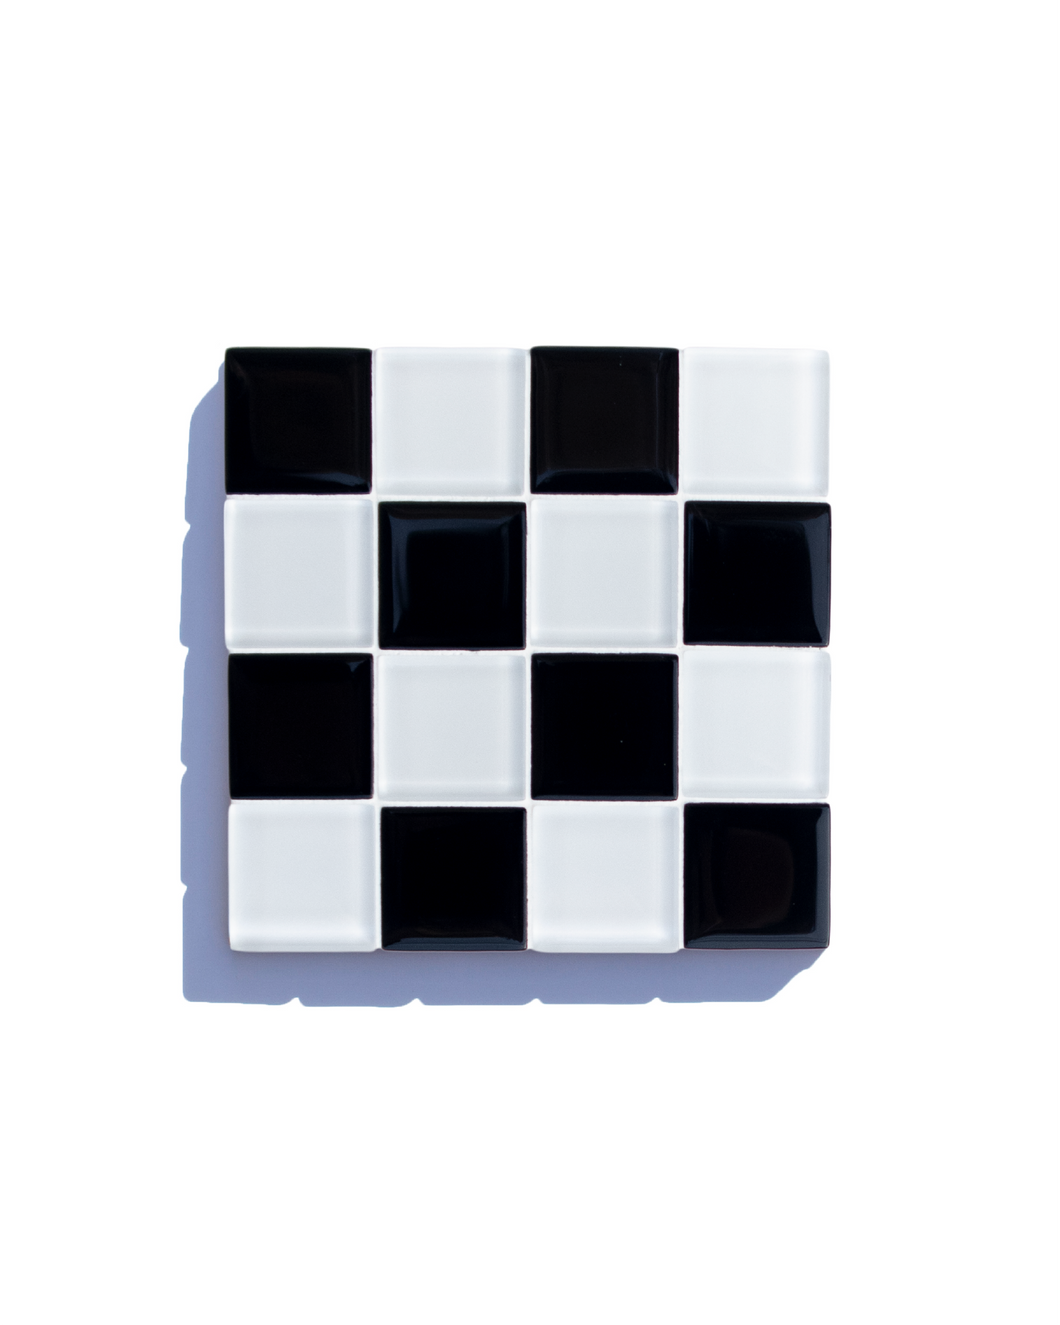 GLASS TILE COASTER - Black and White Checkered